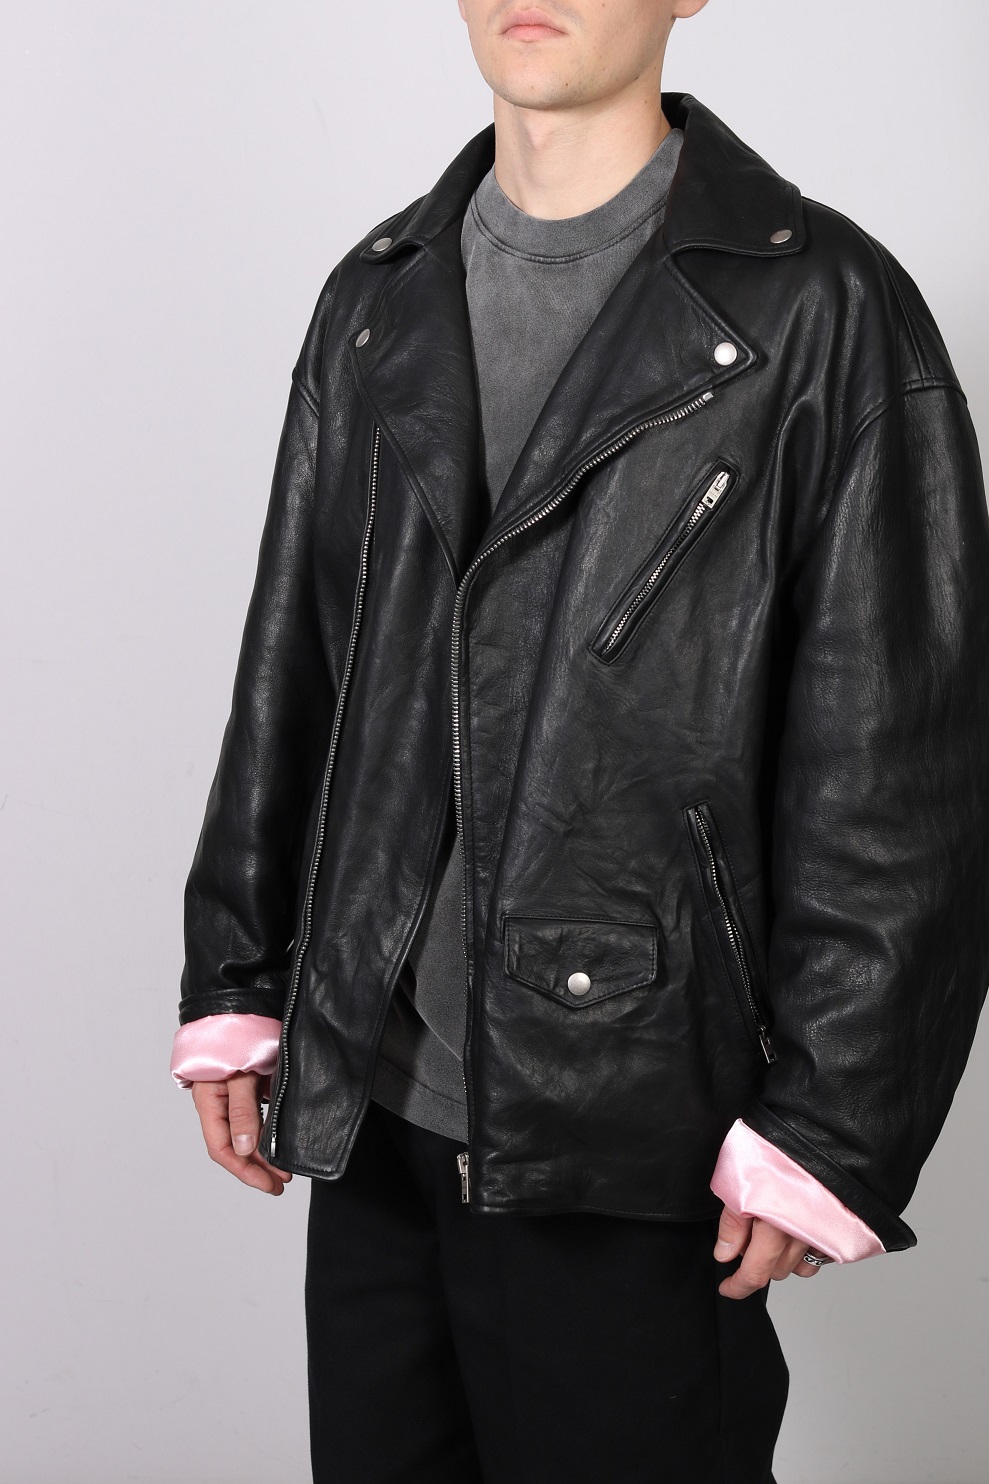 ACNE STUDIOS Vintage Leather Jacket in Black 46